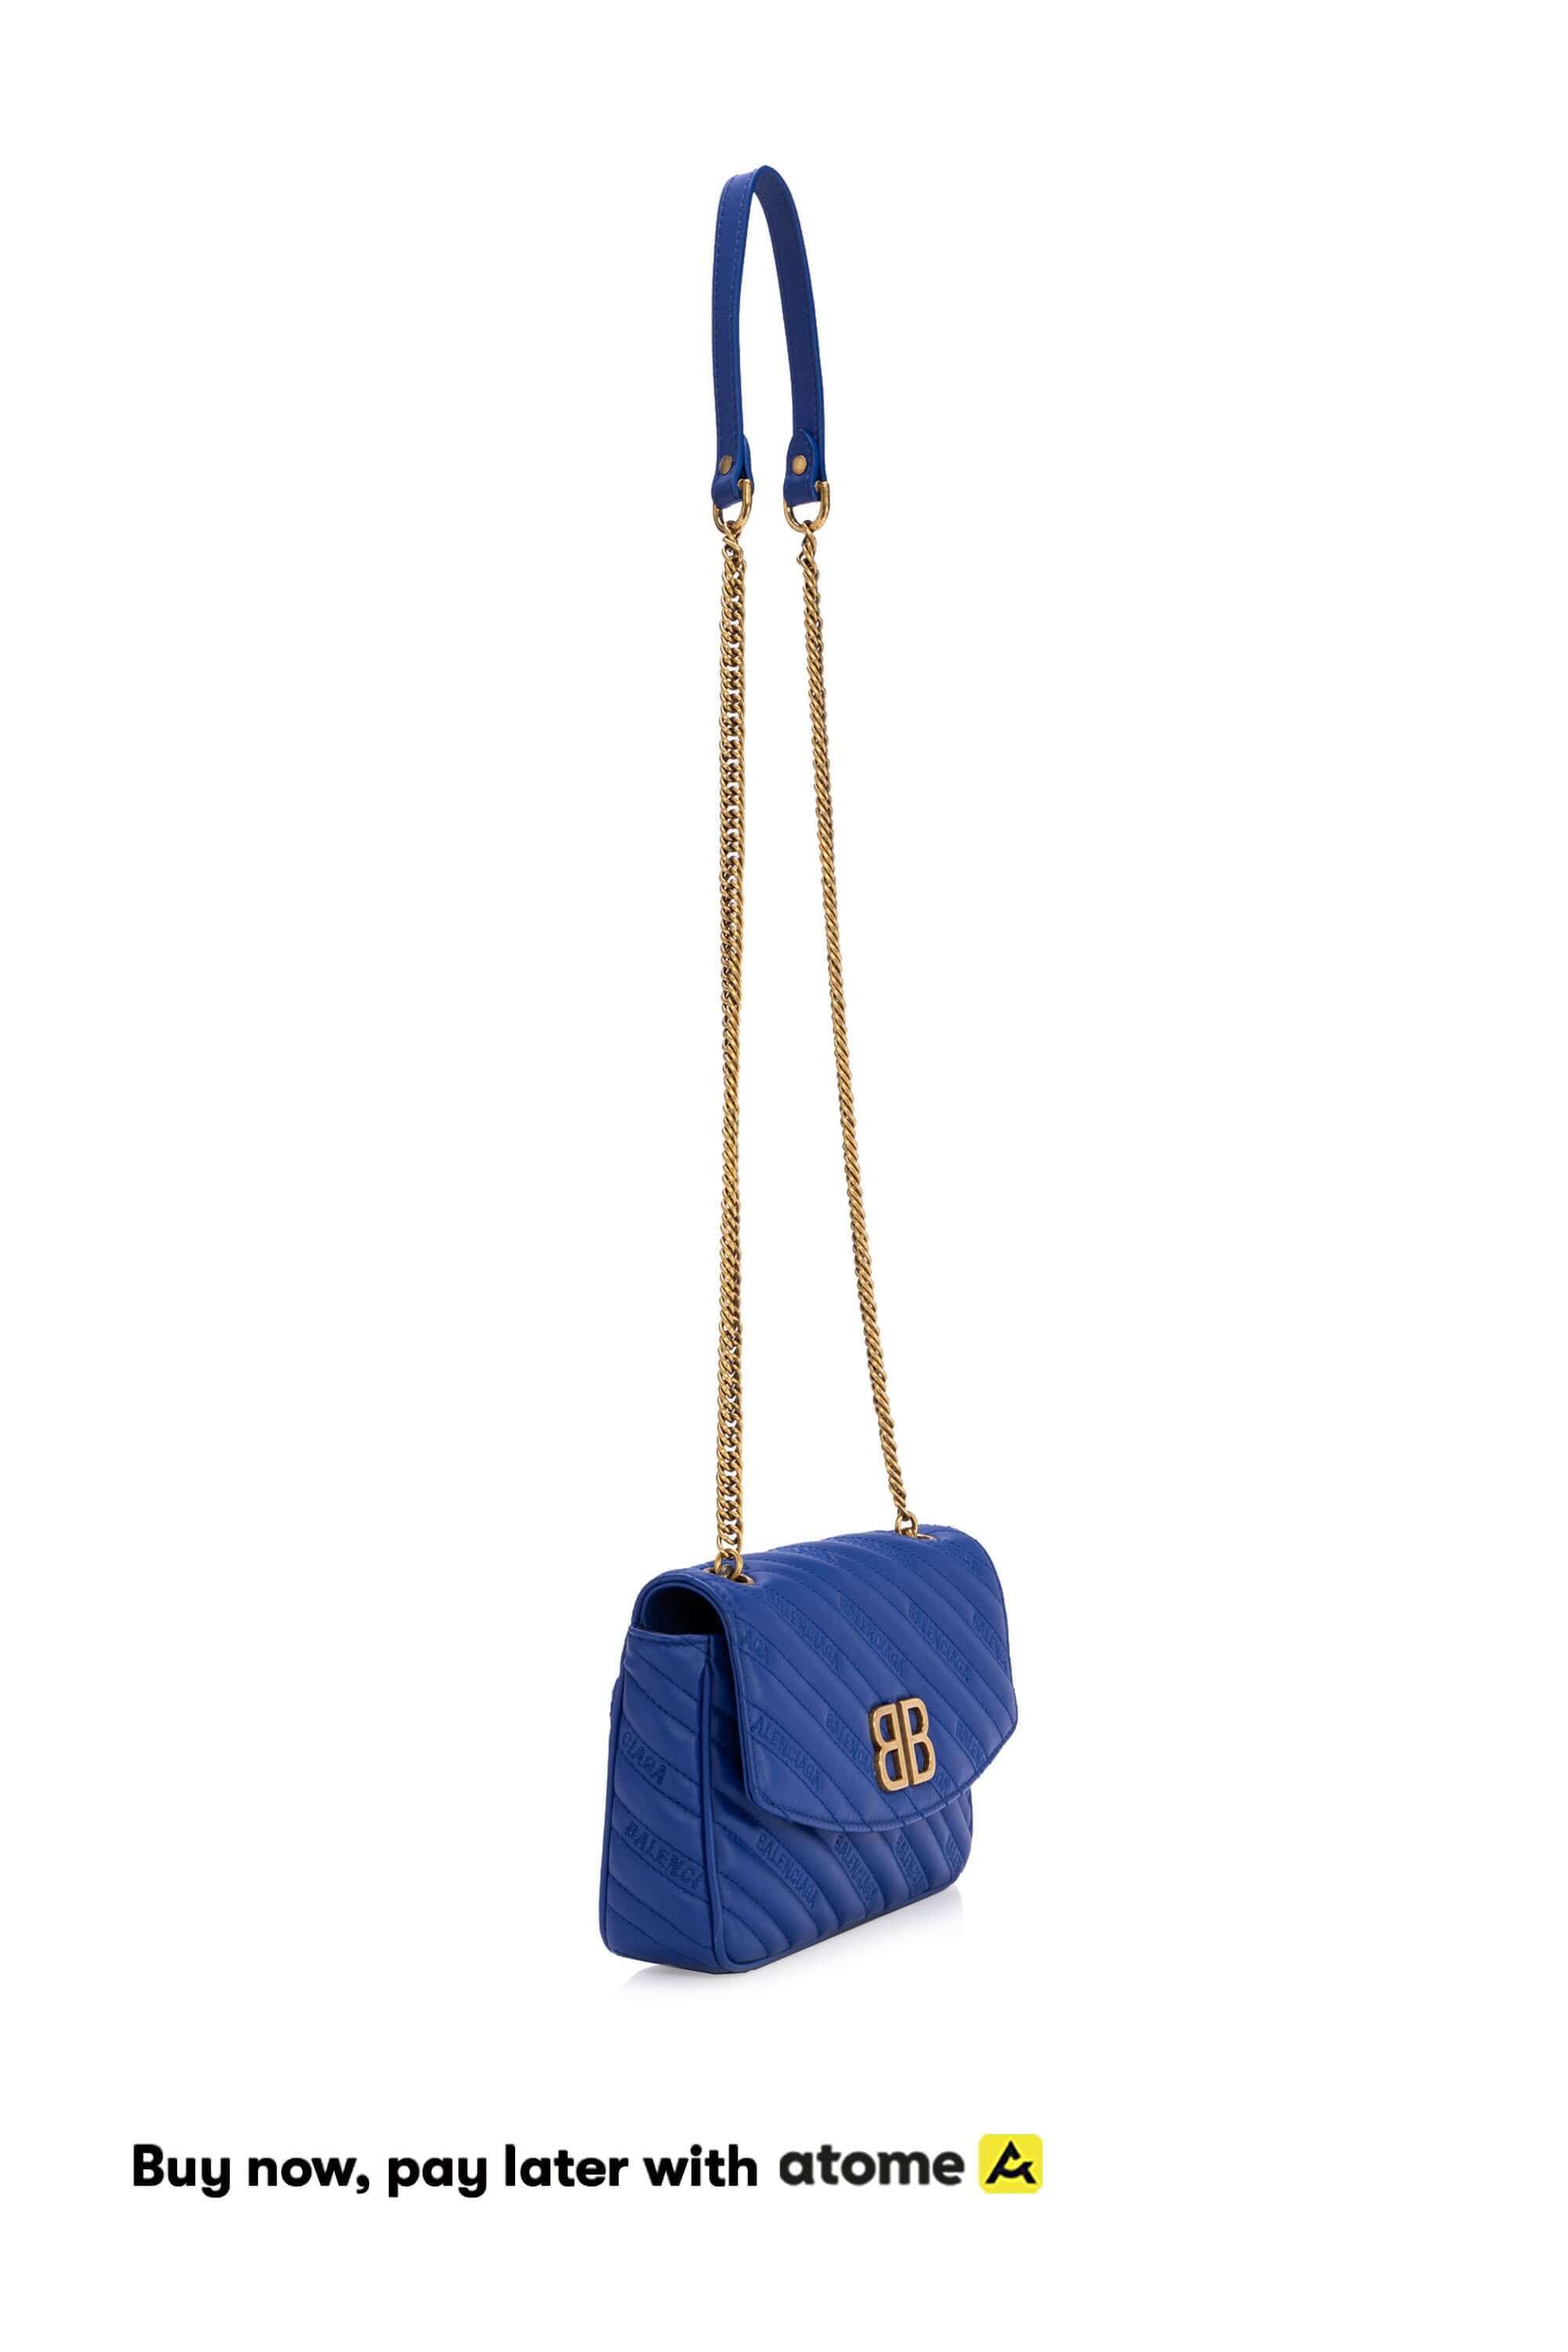 Balenciaga BB Chain Round Shoulder Bag Quilted Velvet Small Blue